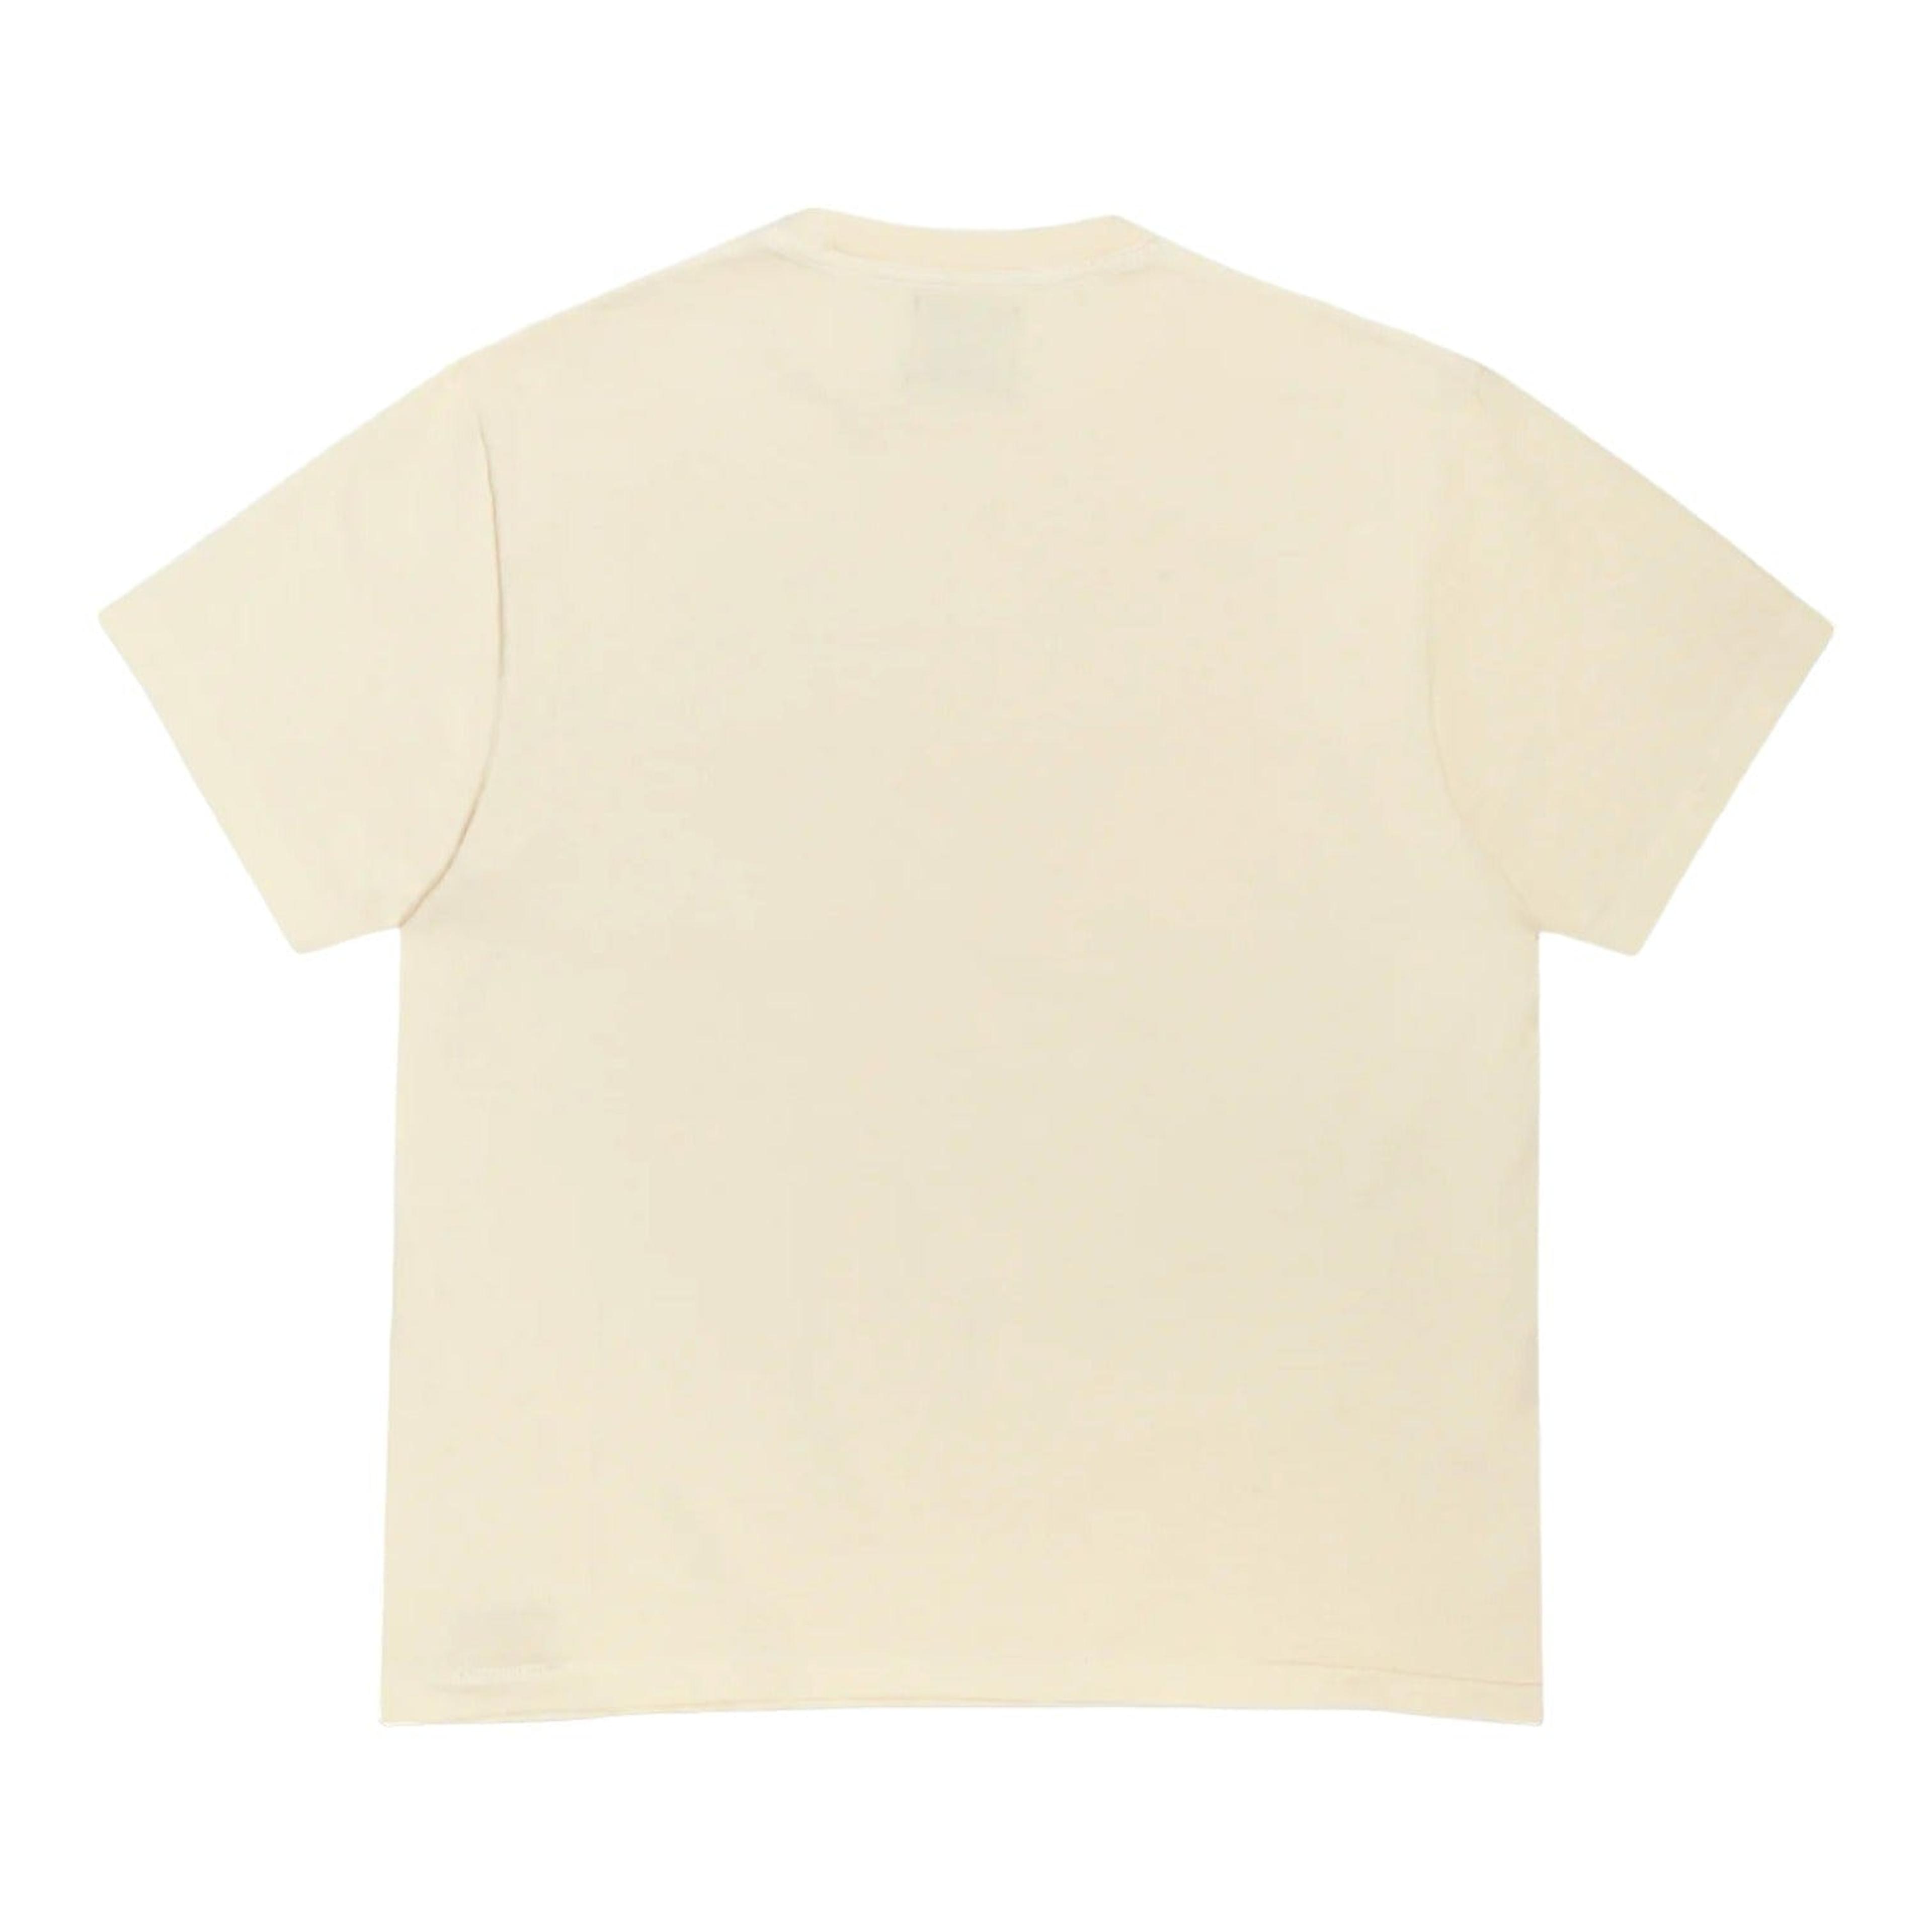 Alternate View 1 of Gallery Department Logo Pocket Short Sleeve Tee Shirt Cream